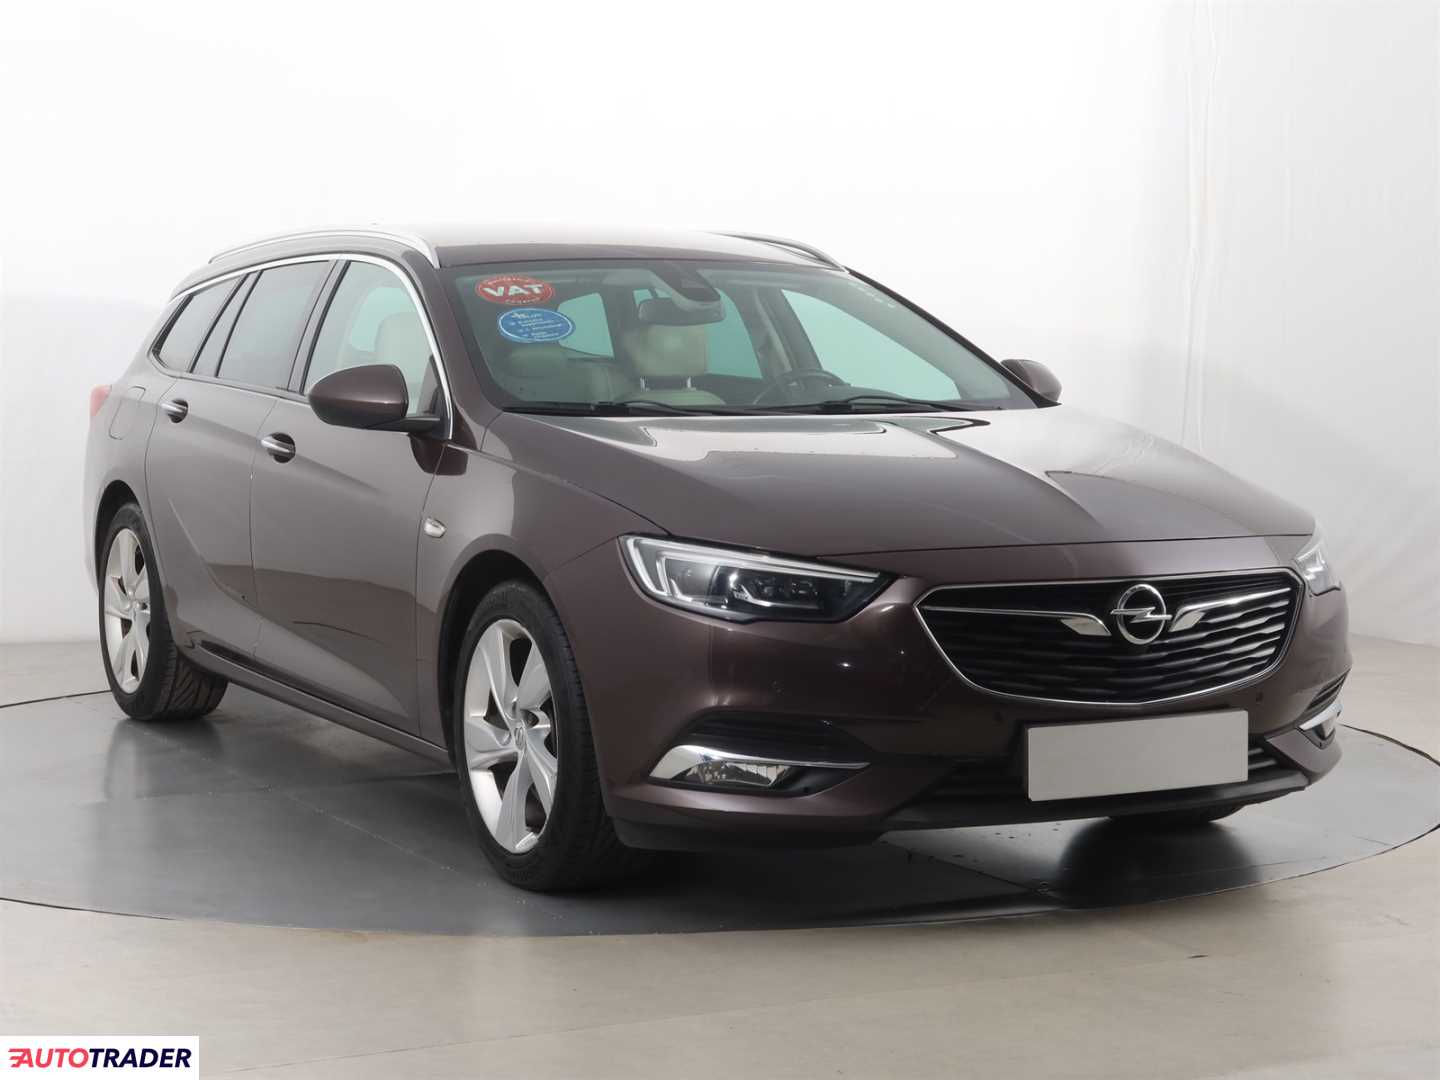 Opel Insignia 2017 1.5 138 KM